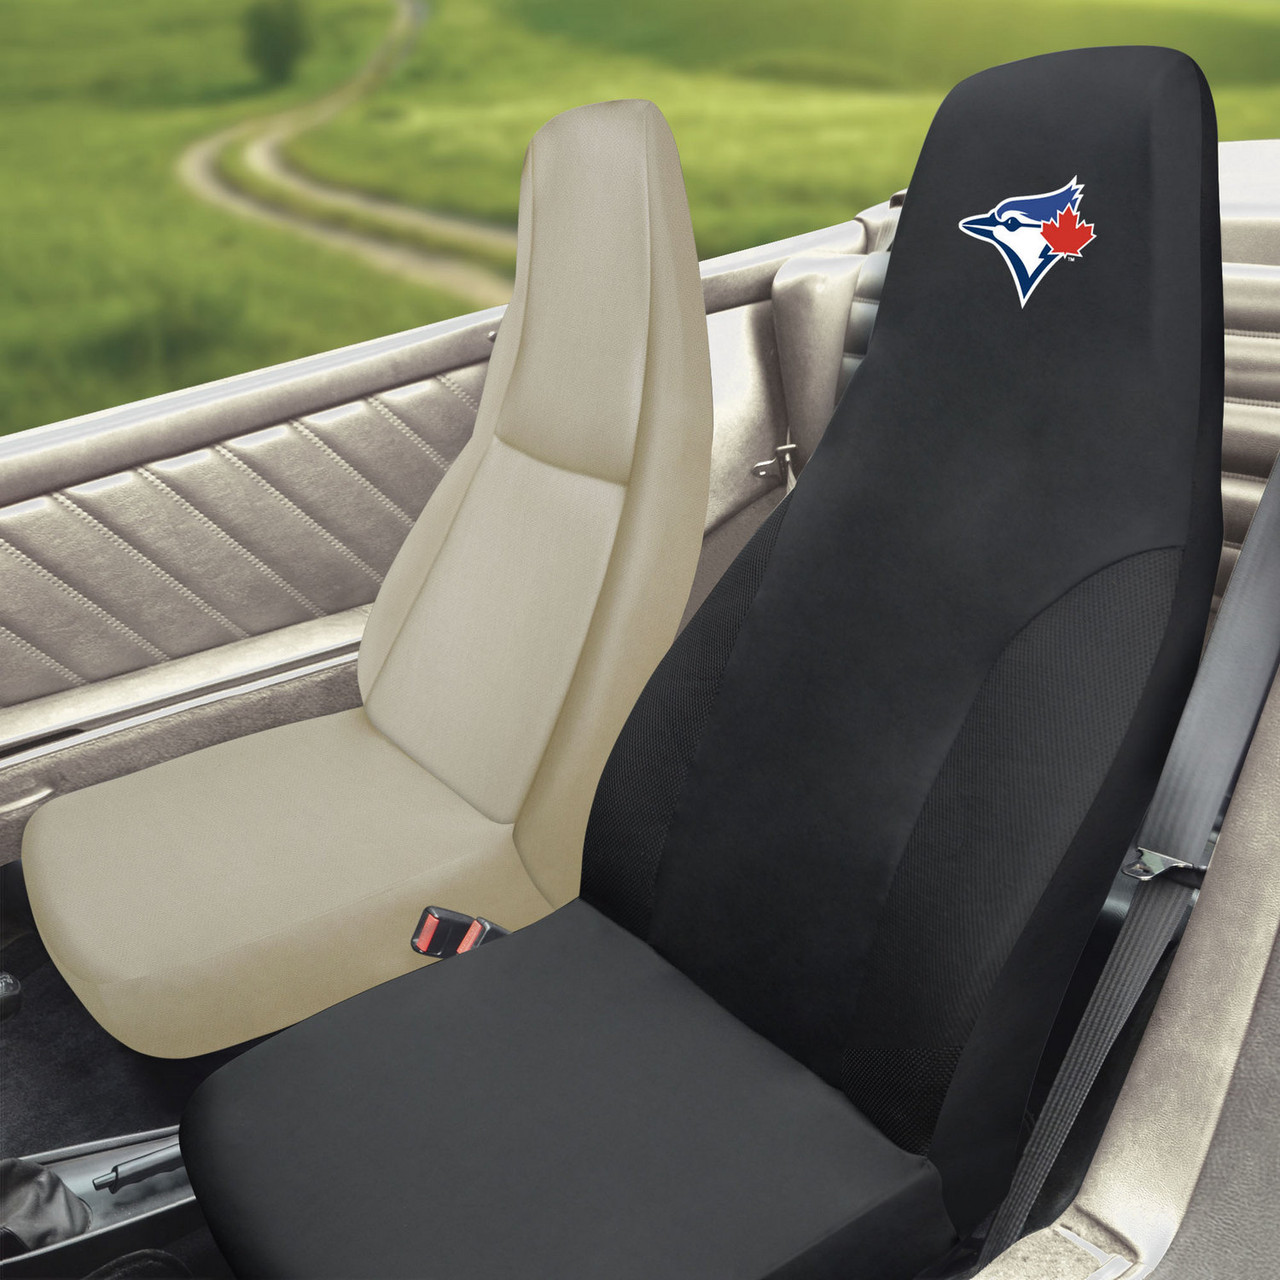 Toronto Blue Jays Black Car Seat Cover - Auto Accessories - MLB